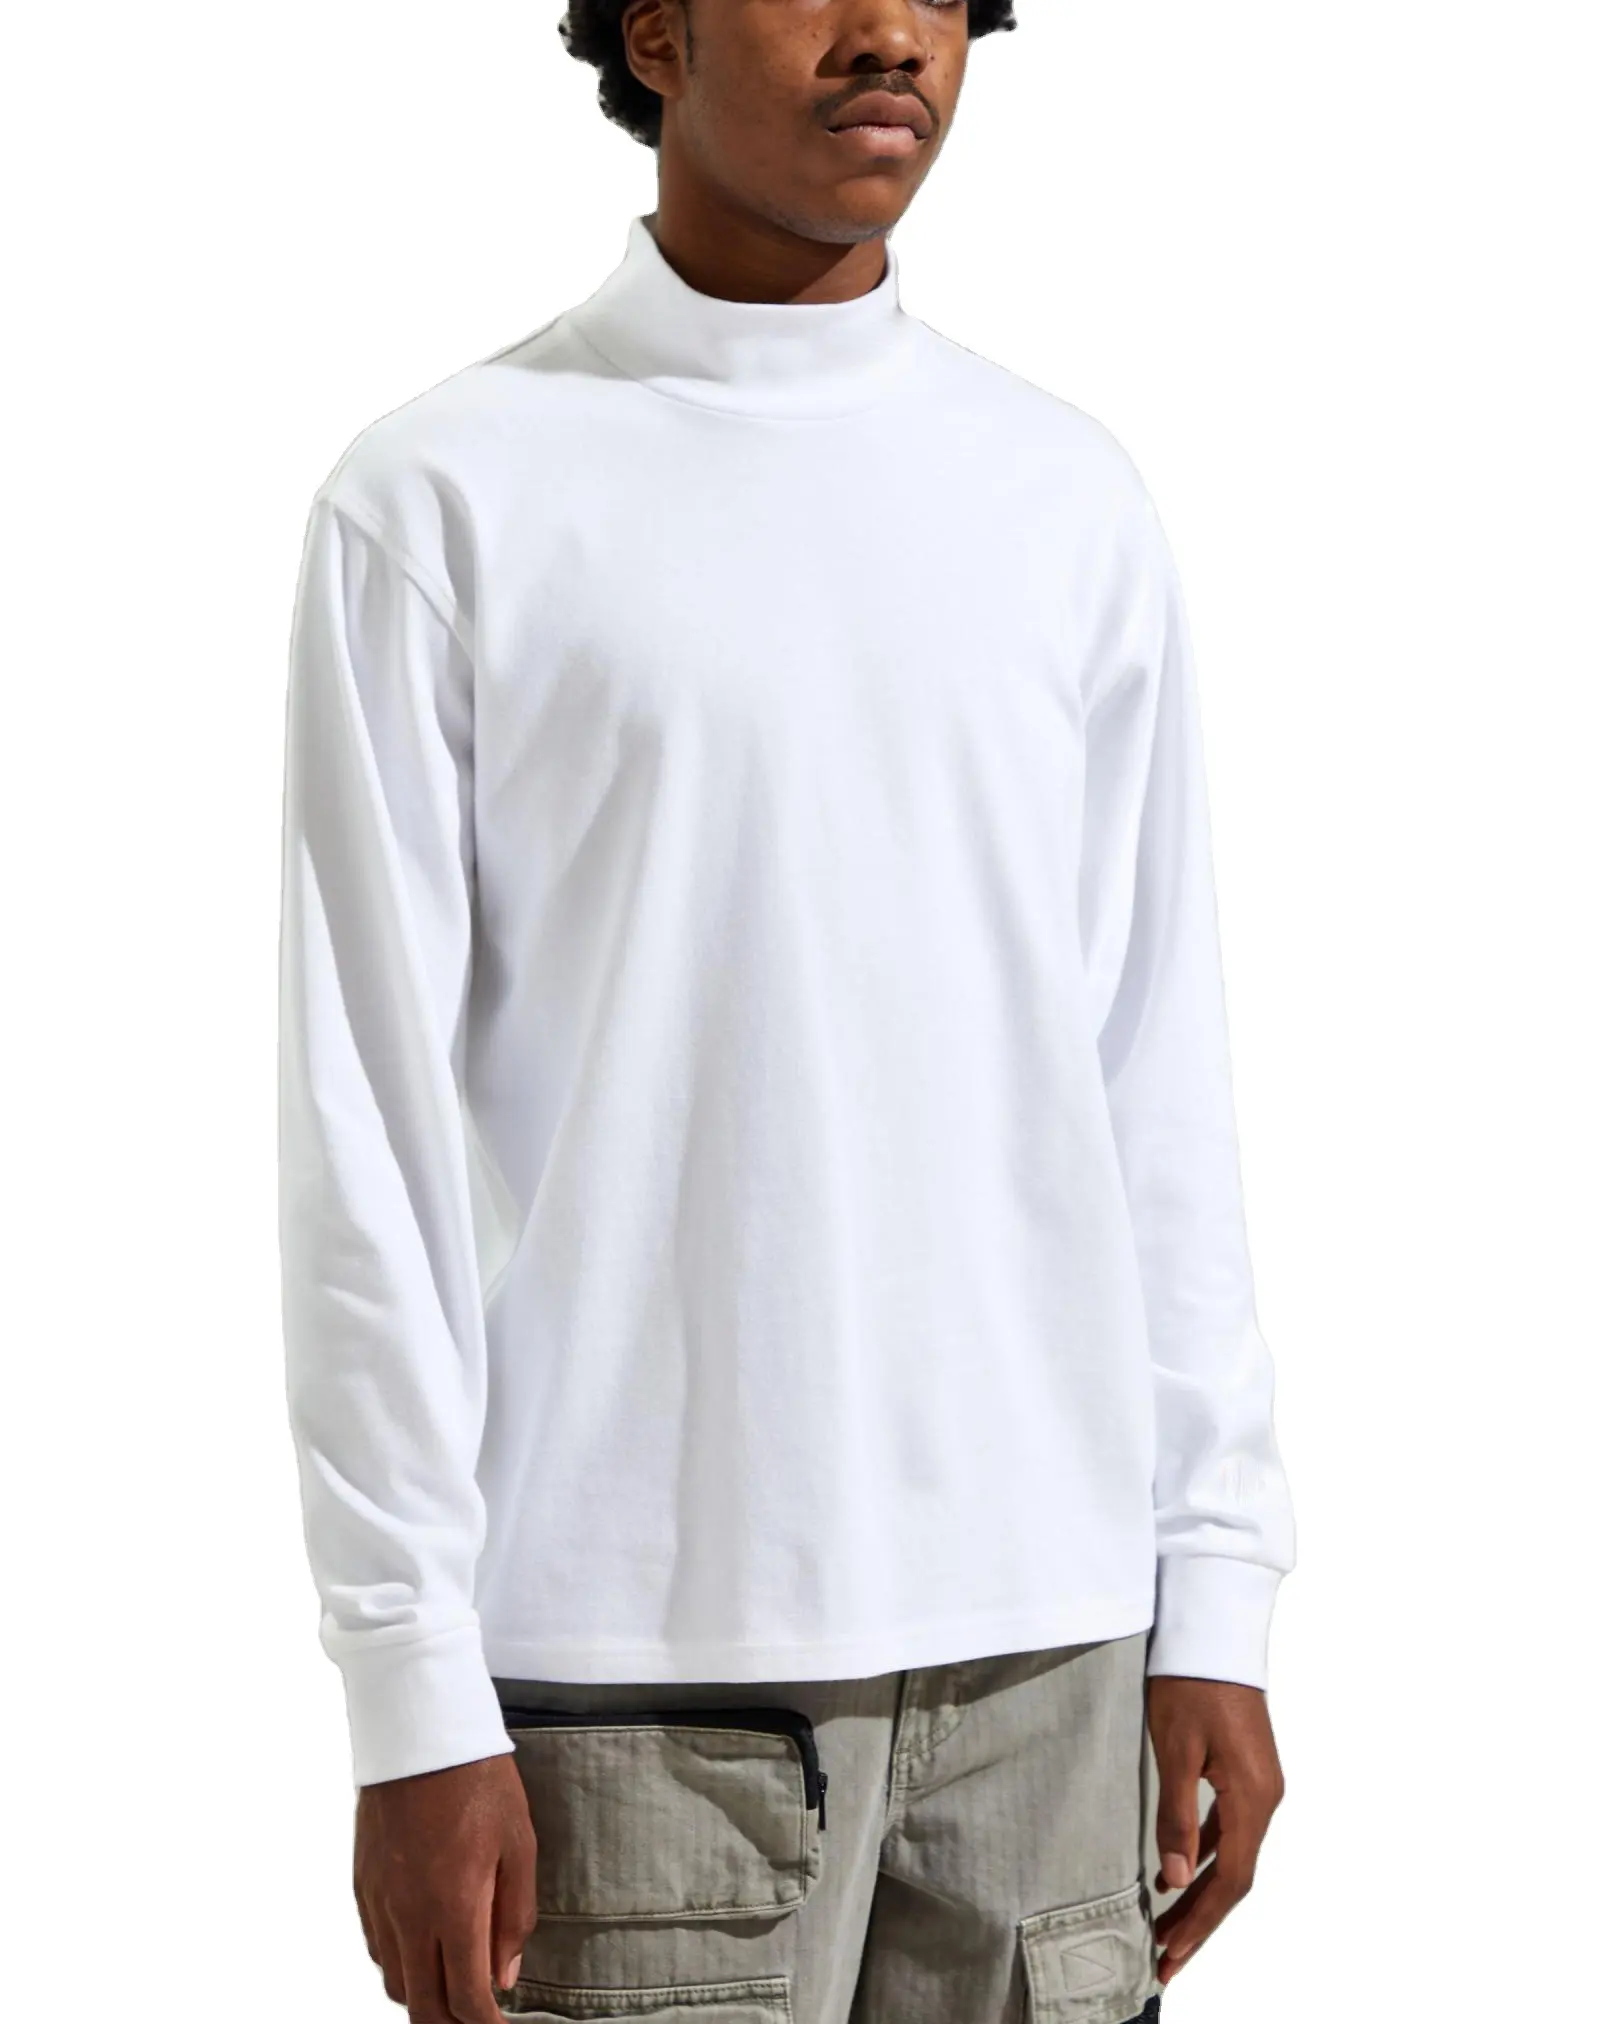 Custom heavyweight mock neck long sleeve tees shirts for men 100% cotton blank tshirt pullover